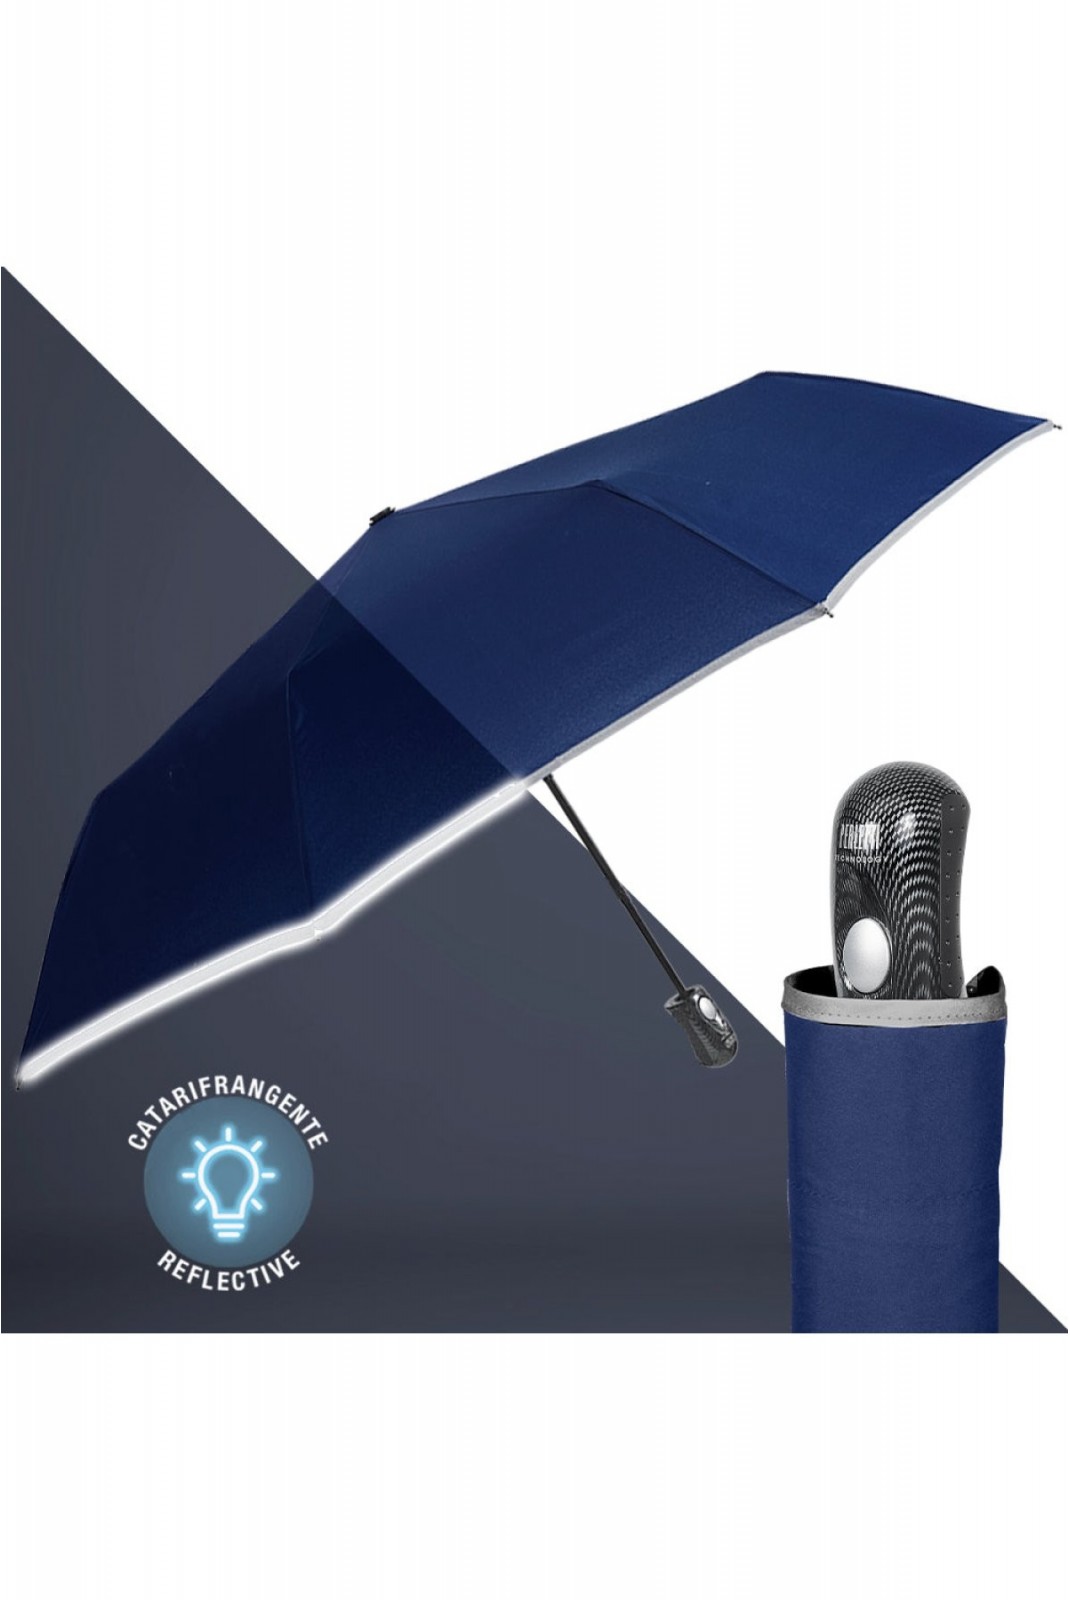 Parapluie de poche pliant Perletti MARINE 21767